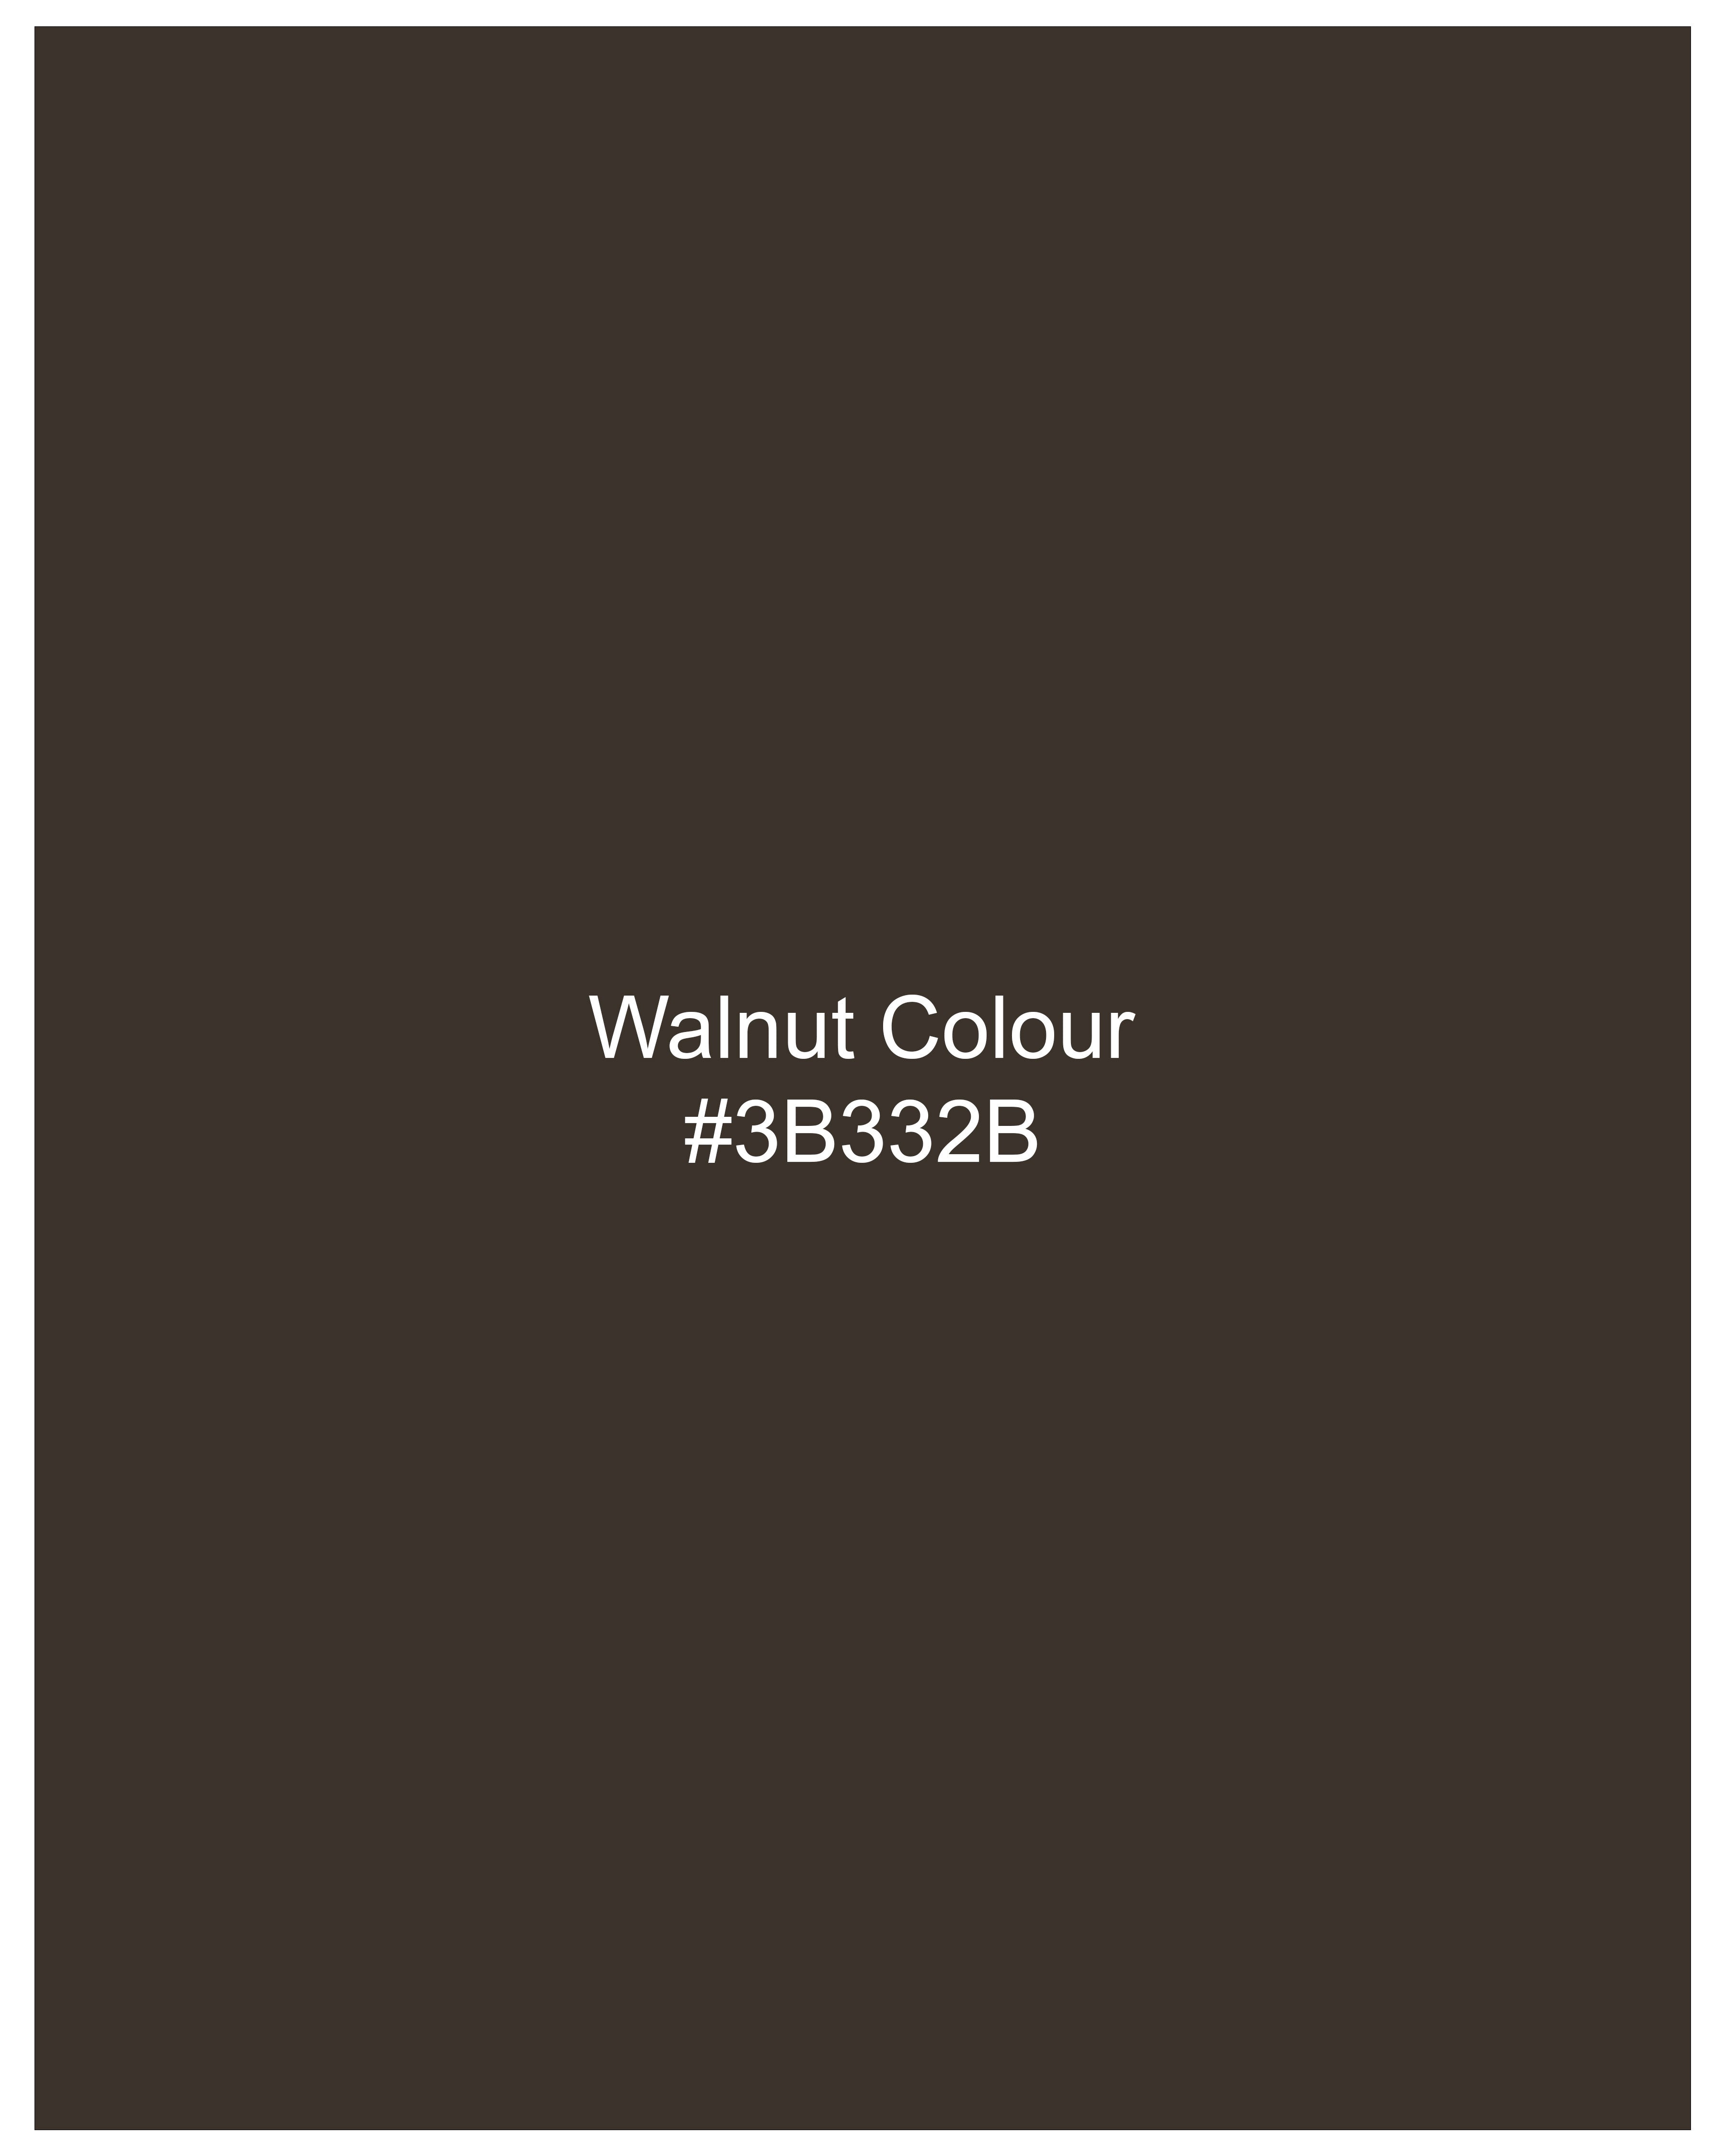 Walnut Brown Solid Premium Cotton Waistcoat V2627-36, V2627-38, V2627-40, V2627-42, V2627-44, V2627-46, V2627-48, V2627-50, V2627-52, V2627-54, V2627-56, V2627-58, V2627-60